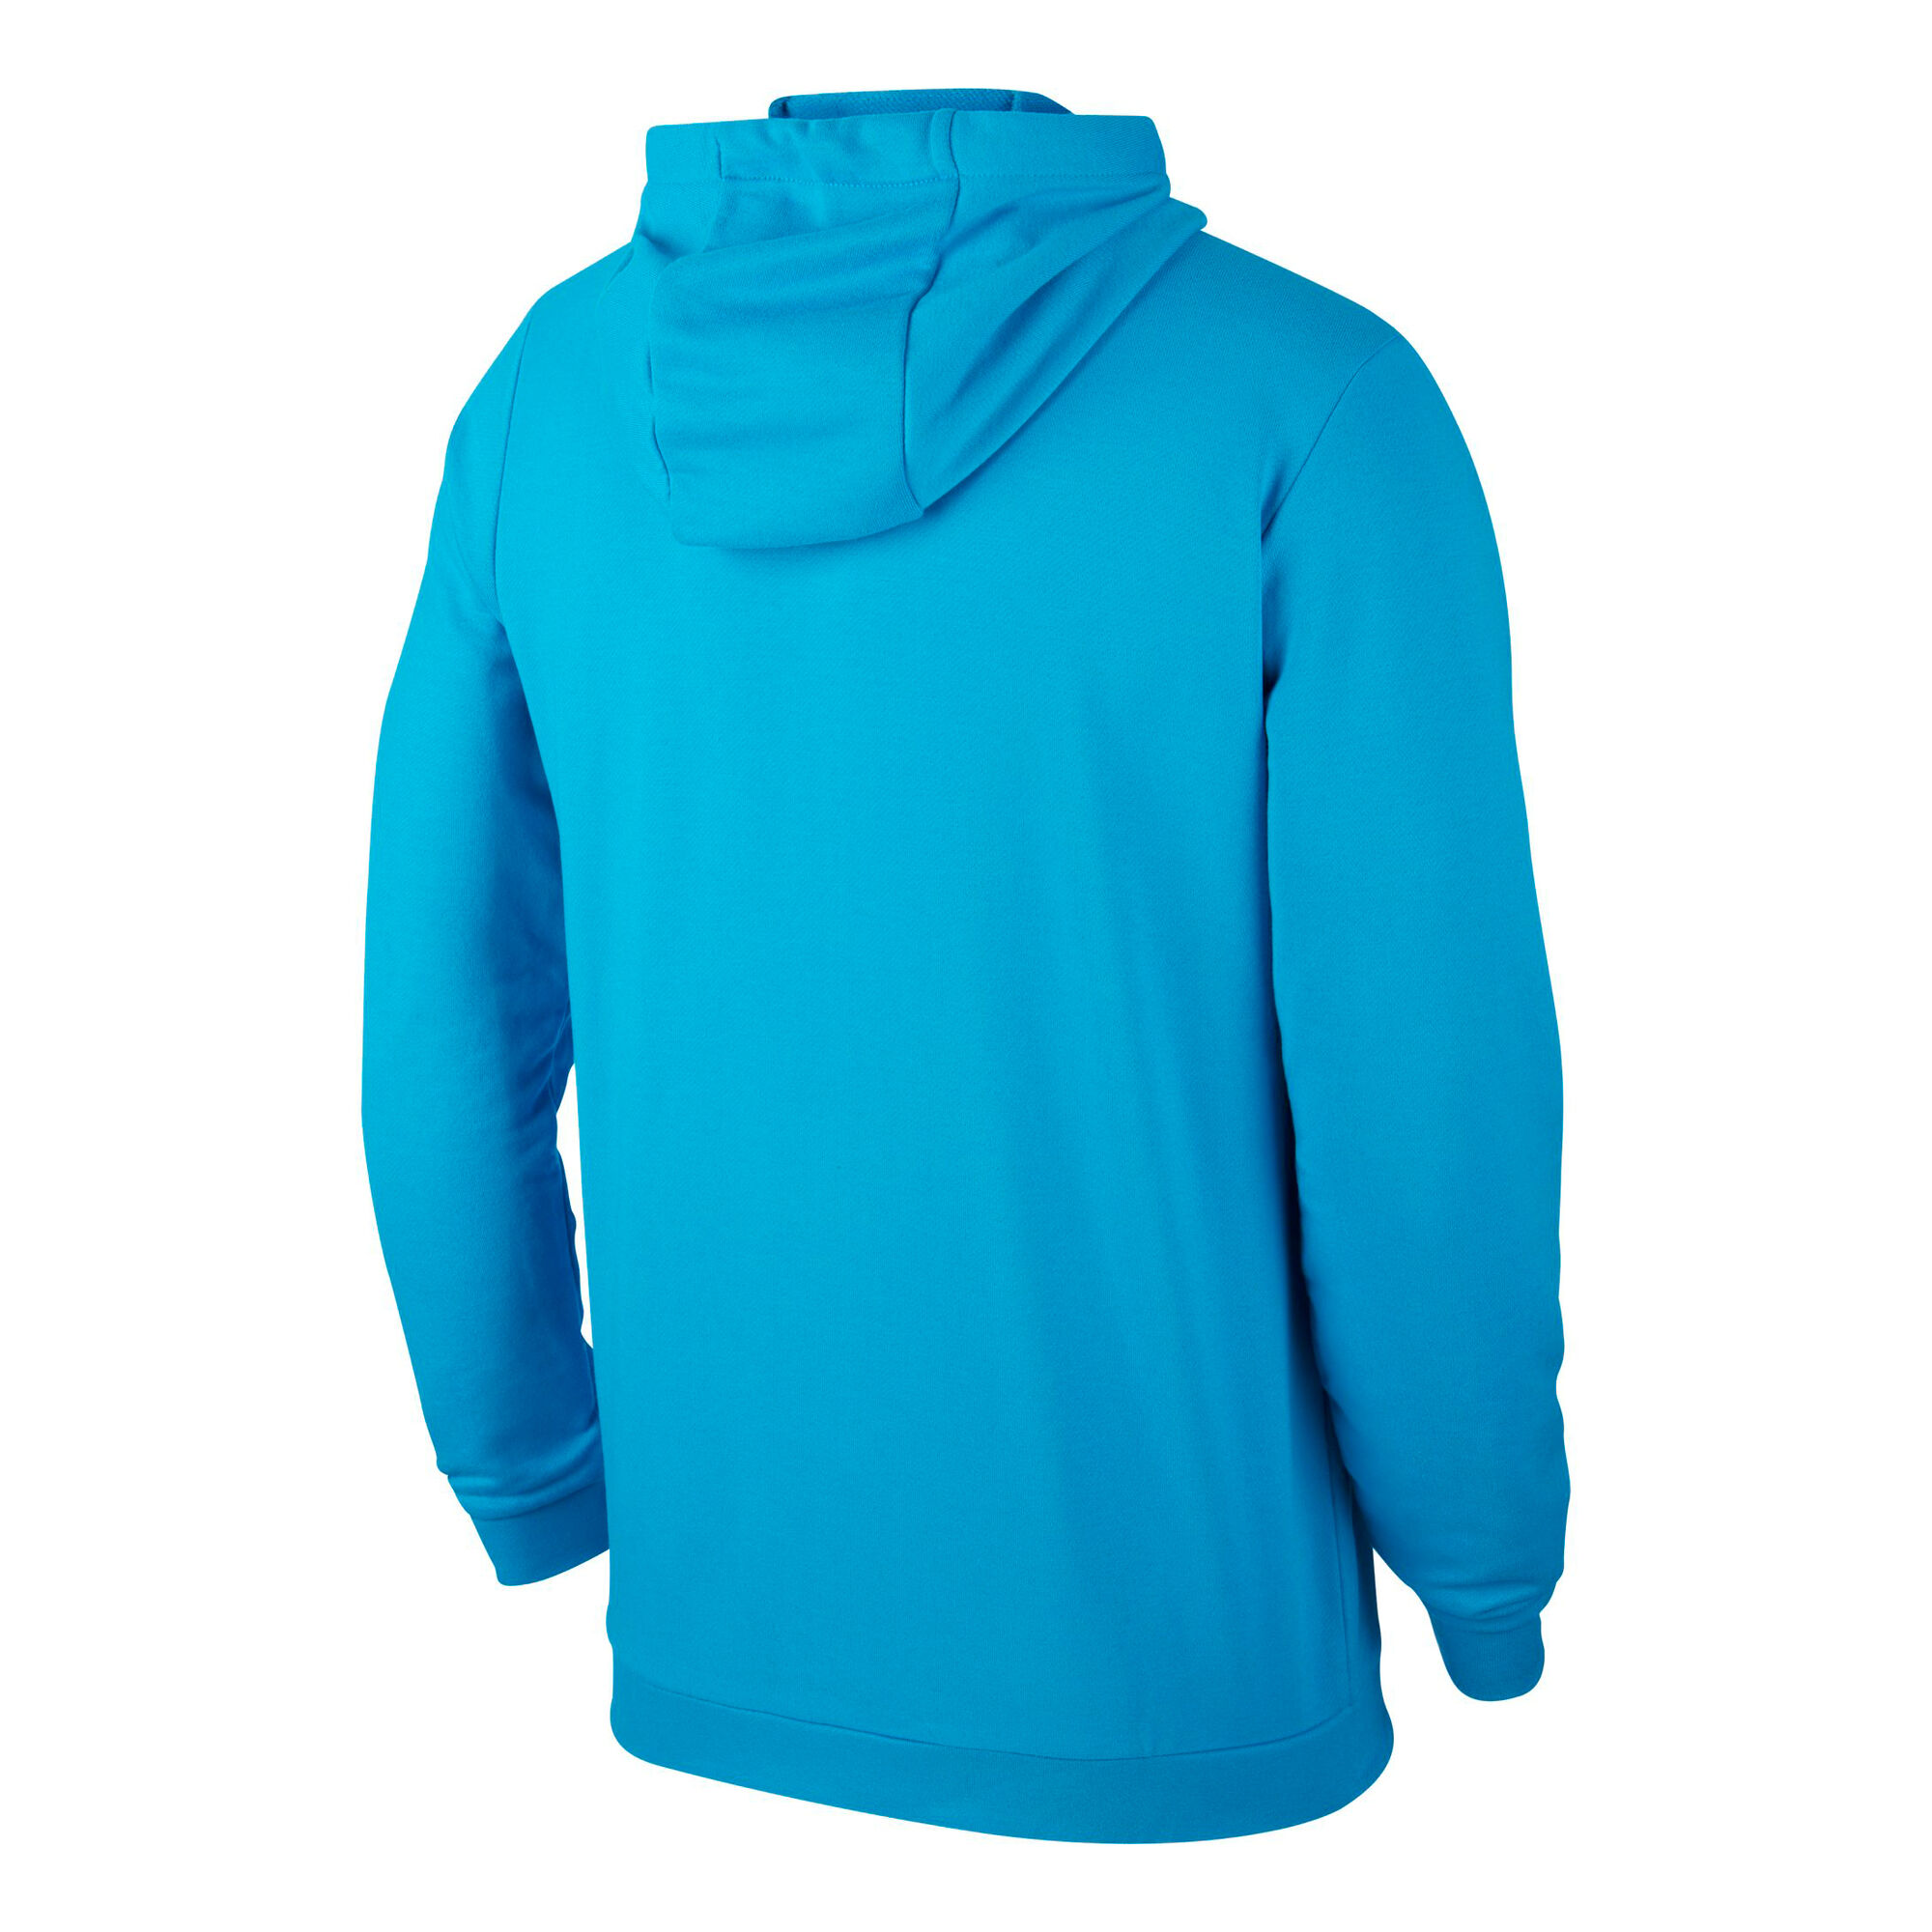 Buy Nike Dri-Fit Training Jacket Men Turquoise, Black online | Tennis ...